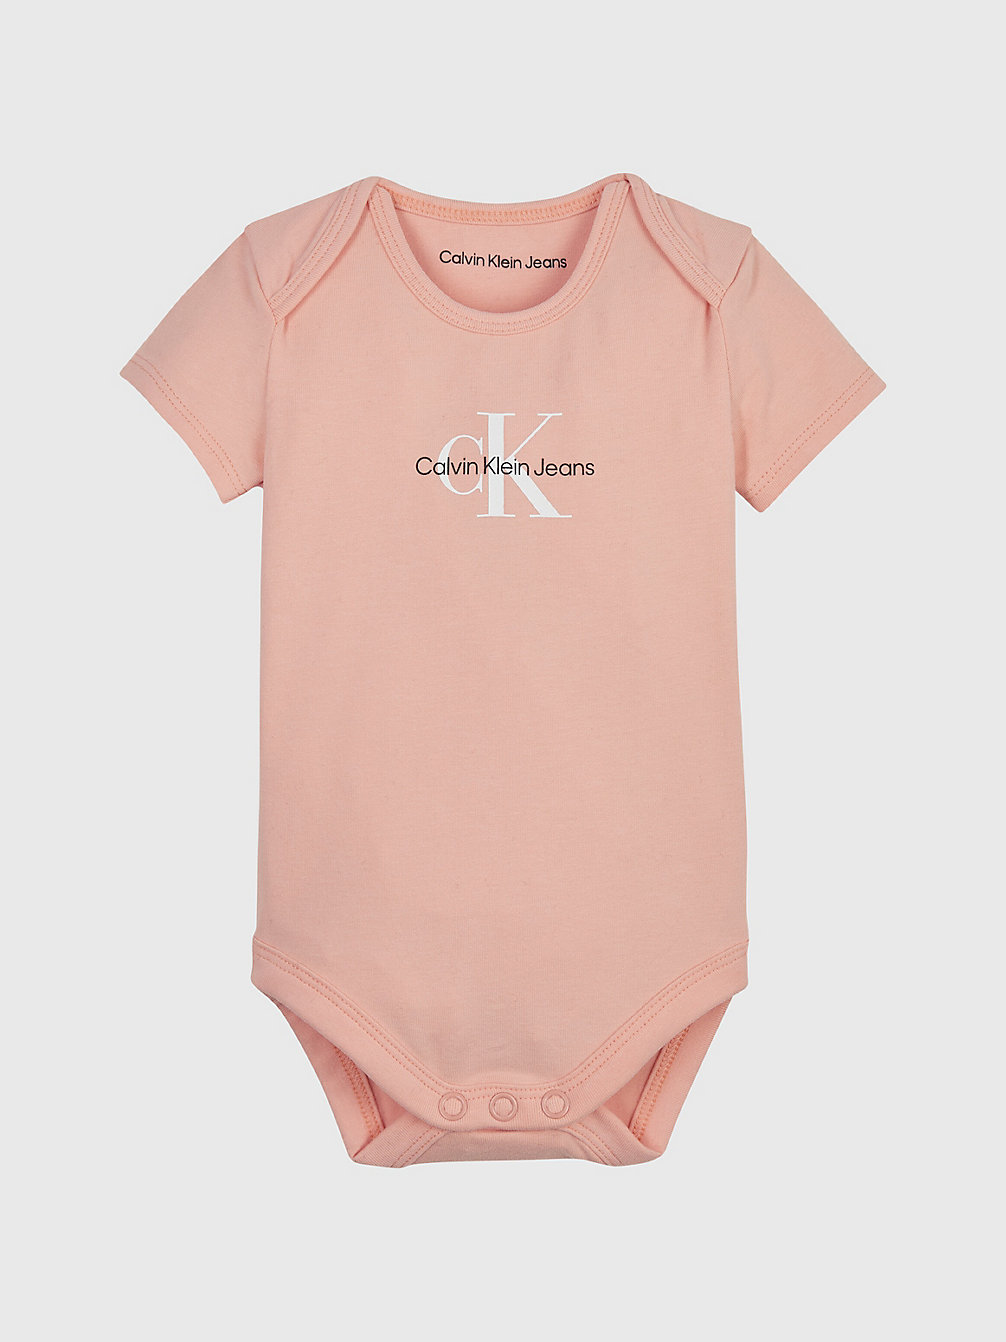 FRESH CANTALOUPE > Logo-Baby-Body > undefined newborn - Calvin Klein